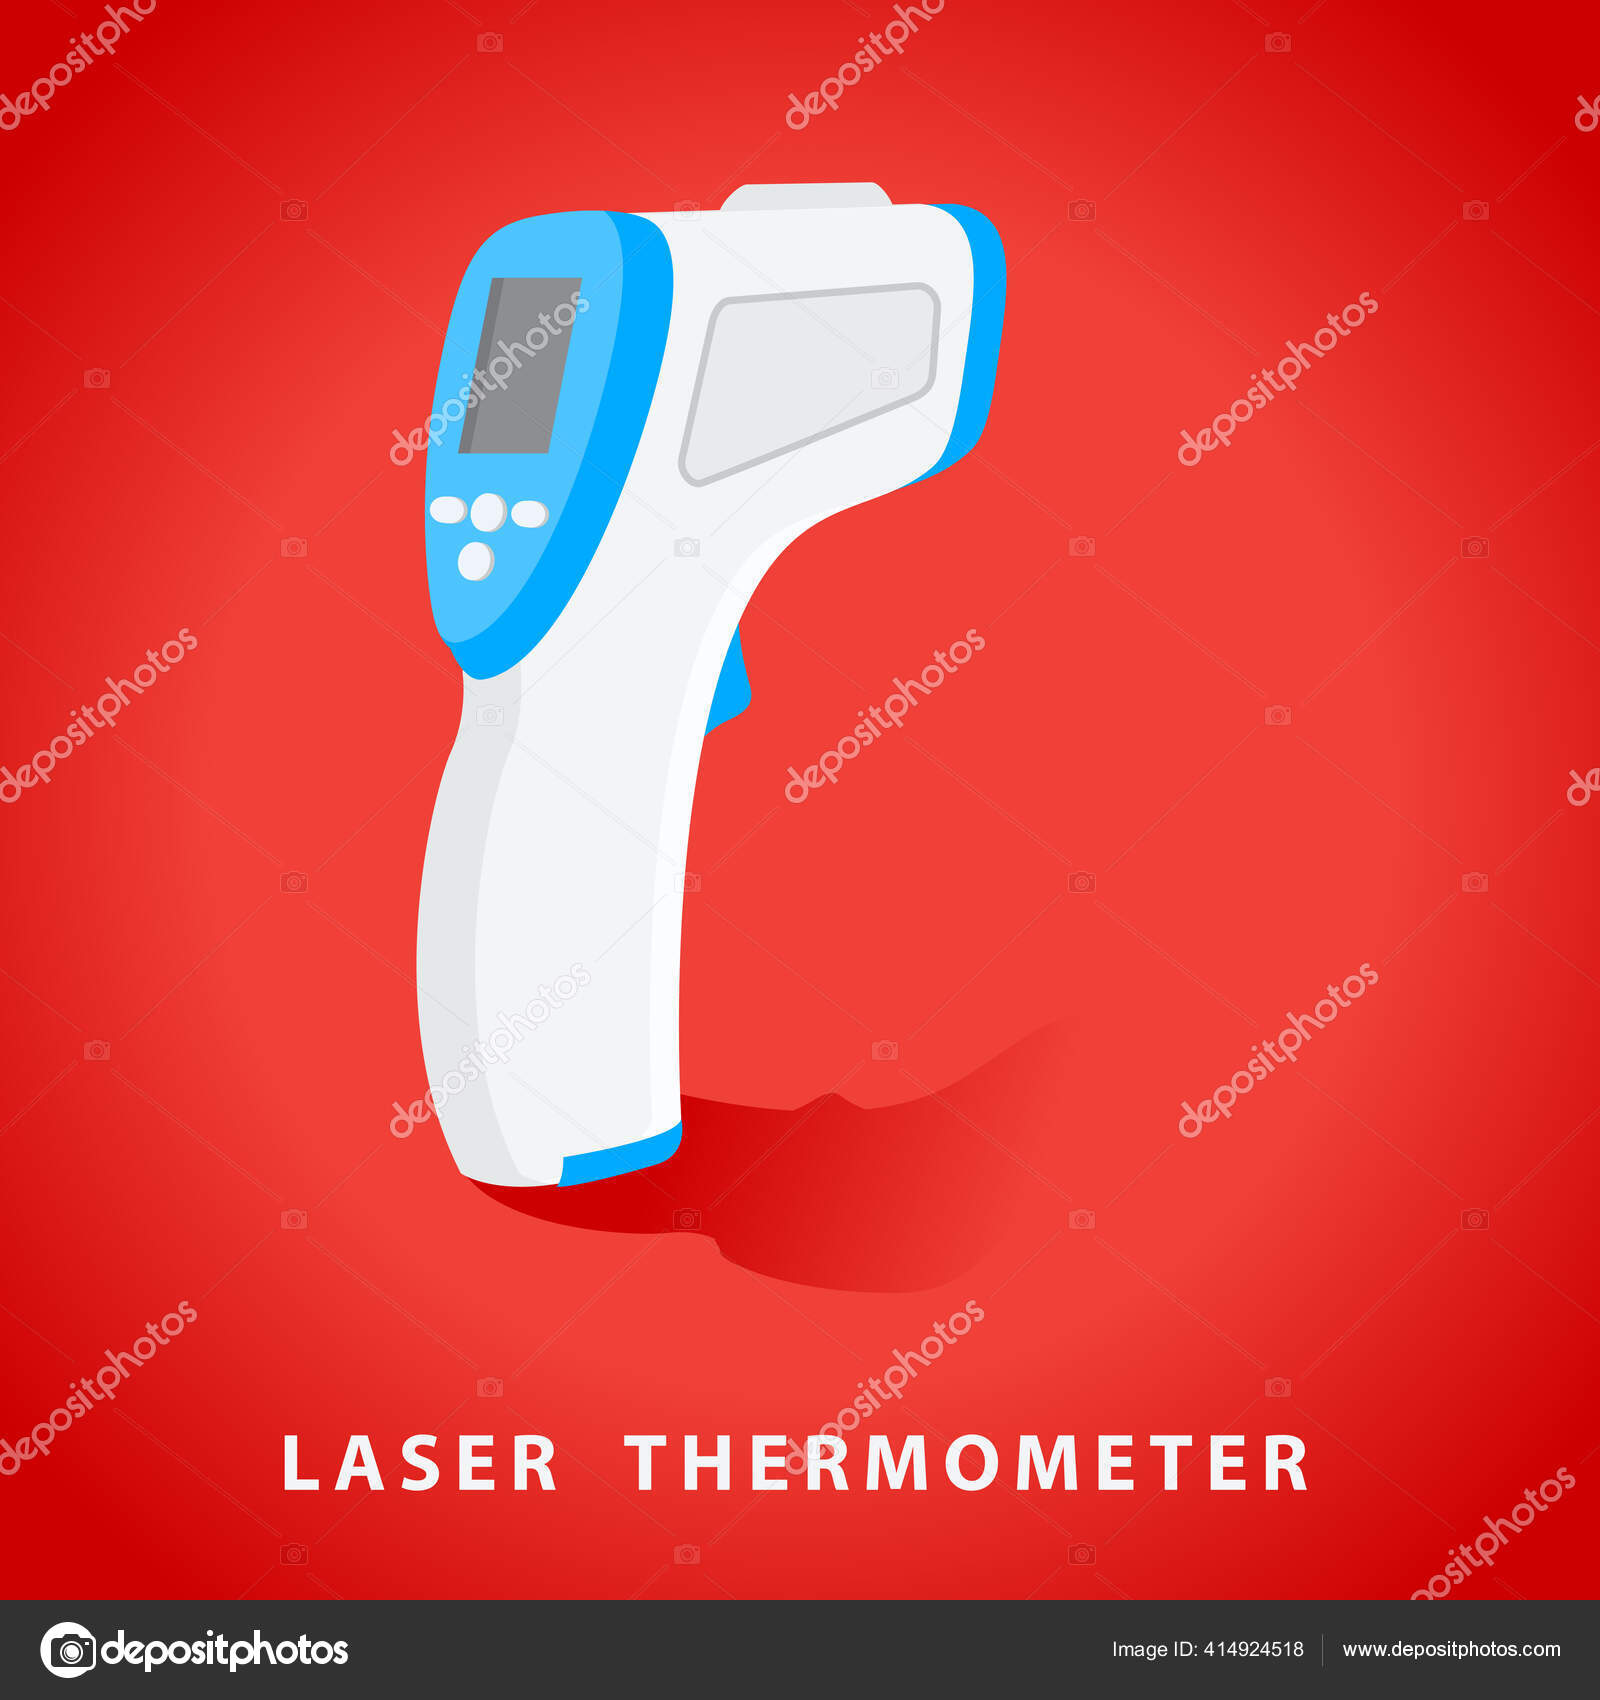 https://st4.depositphotos.com/22433164/41492/v/1600/depositphotos_414924518-stock-illustration-temperature-thermometer-gun-check-forehead.jpg